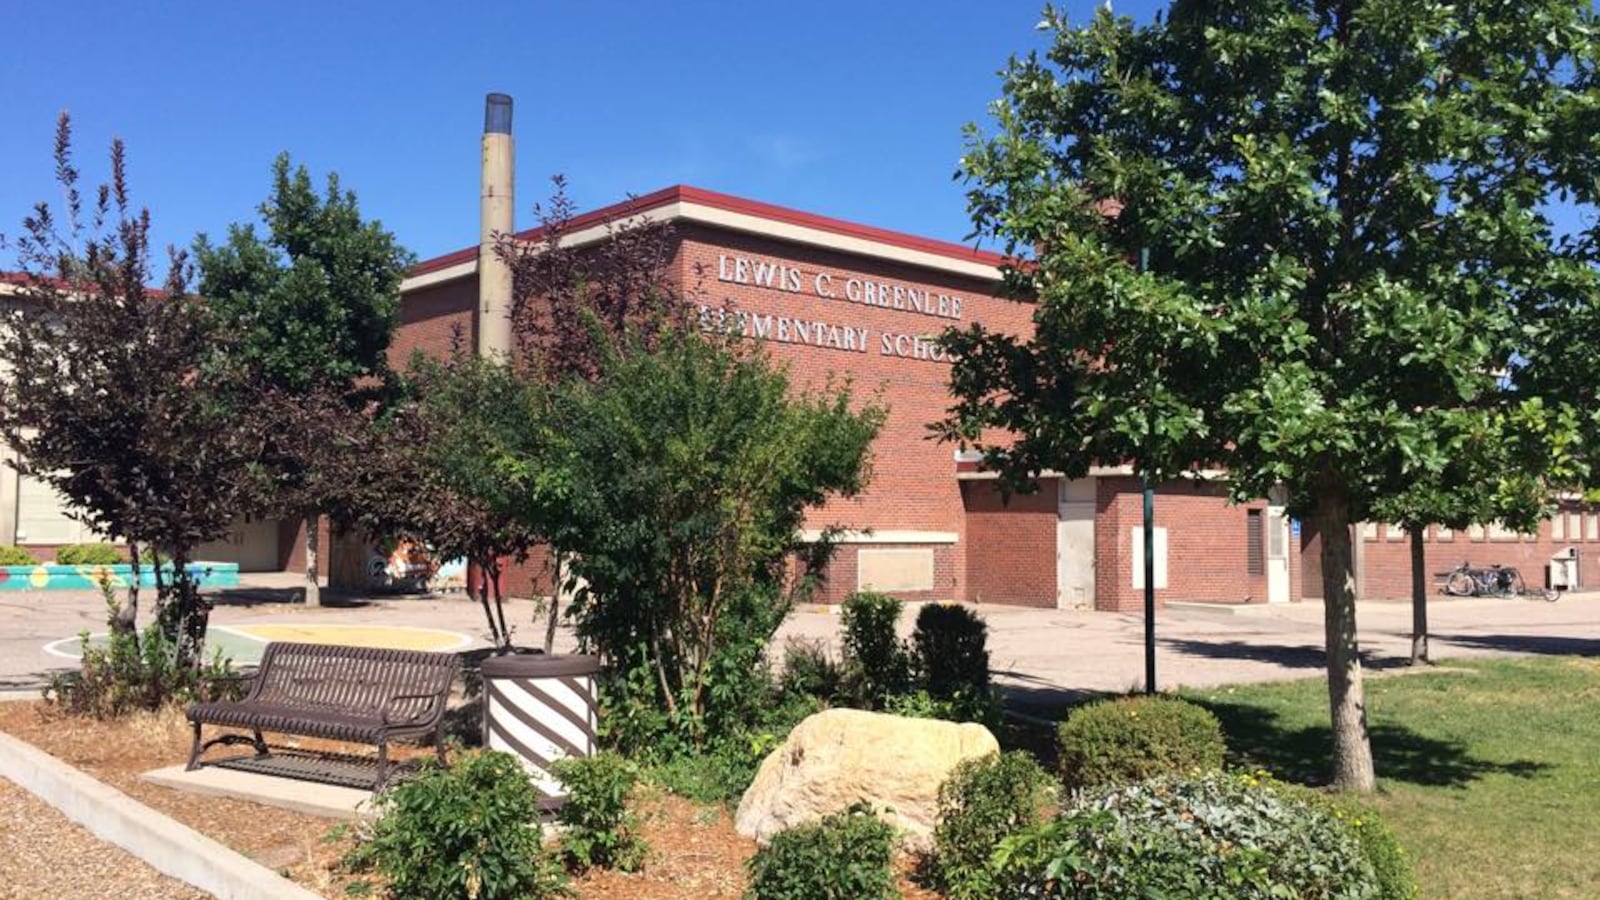 Greenlee Elementary school in Denver